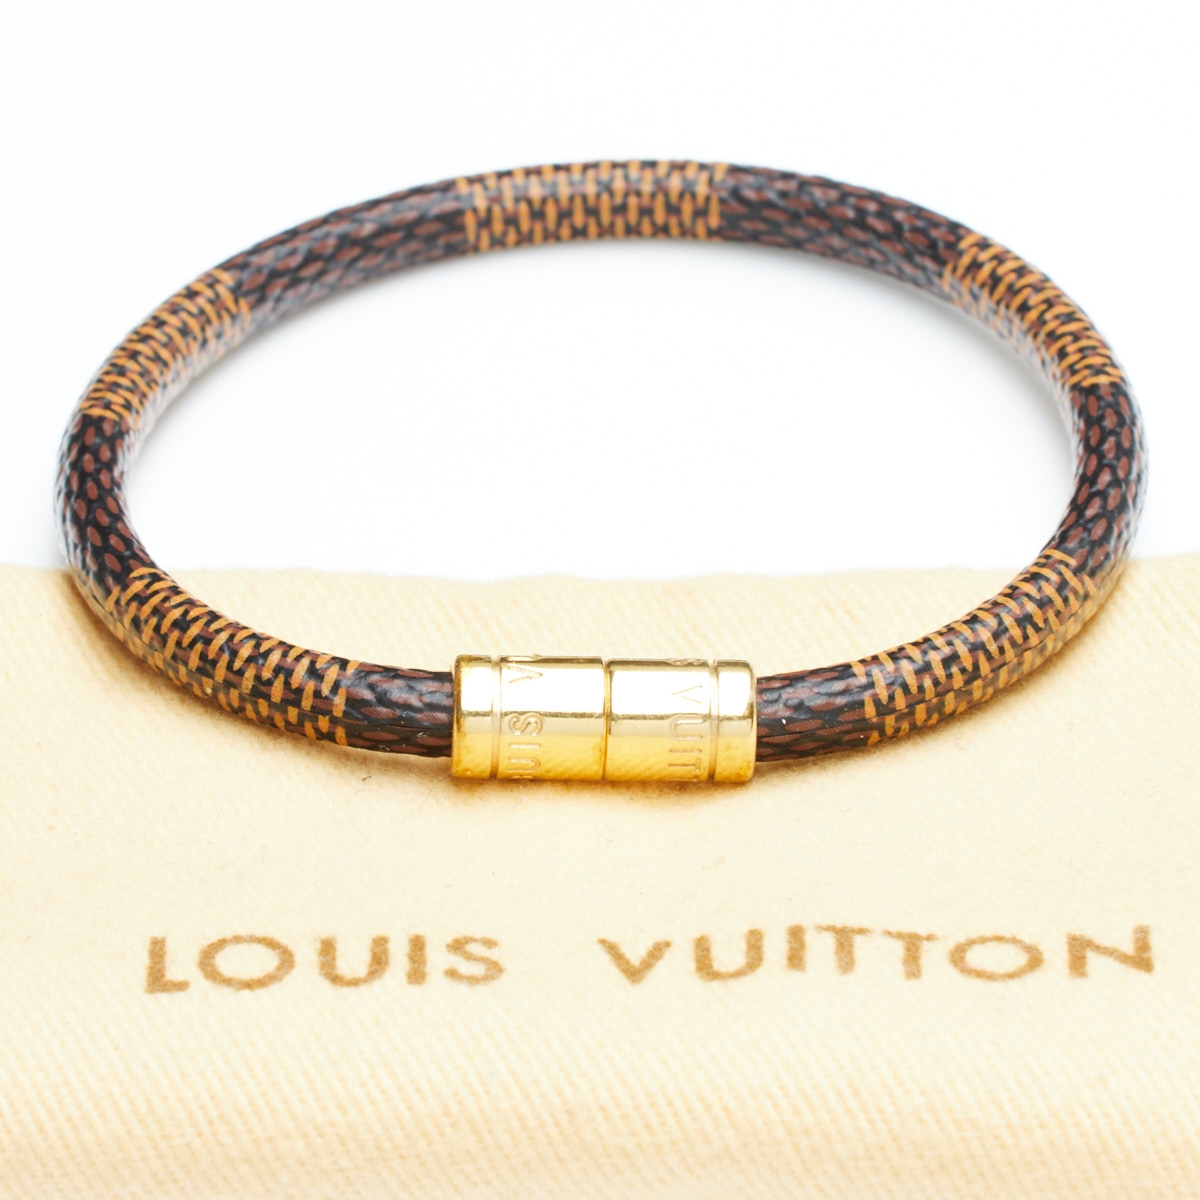 Louis Vuitton - Armband - Image 2 of 2